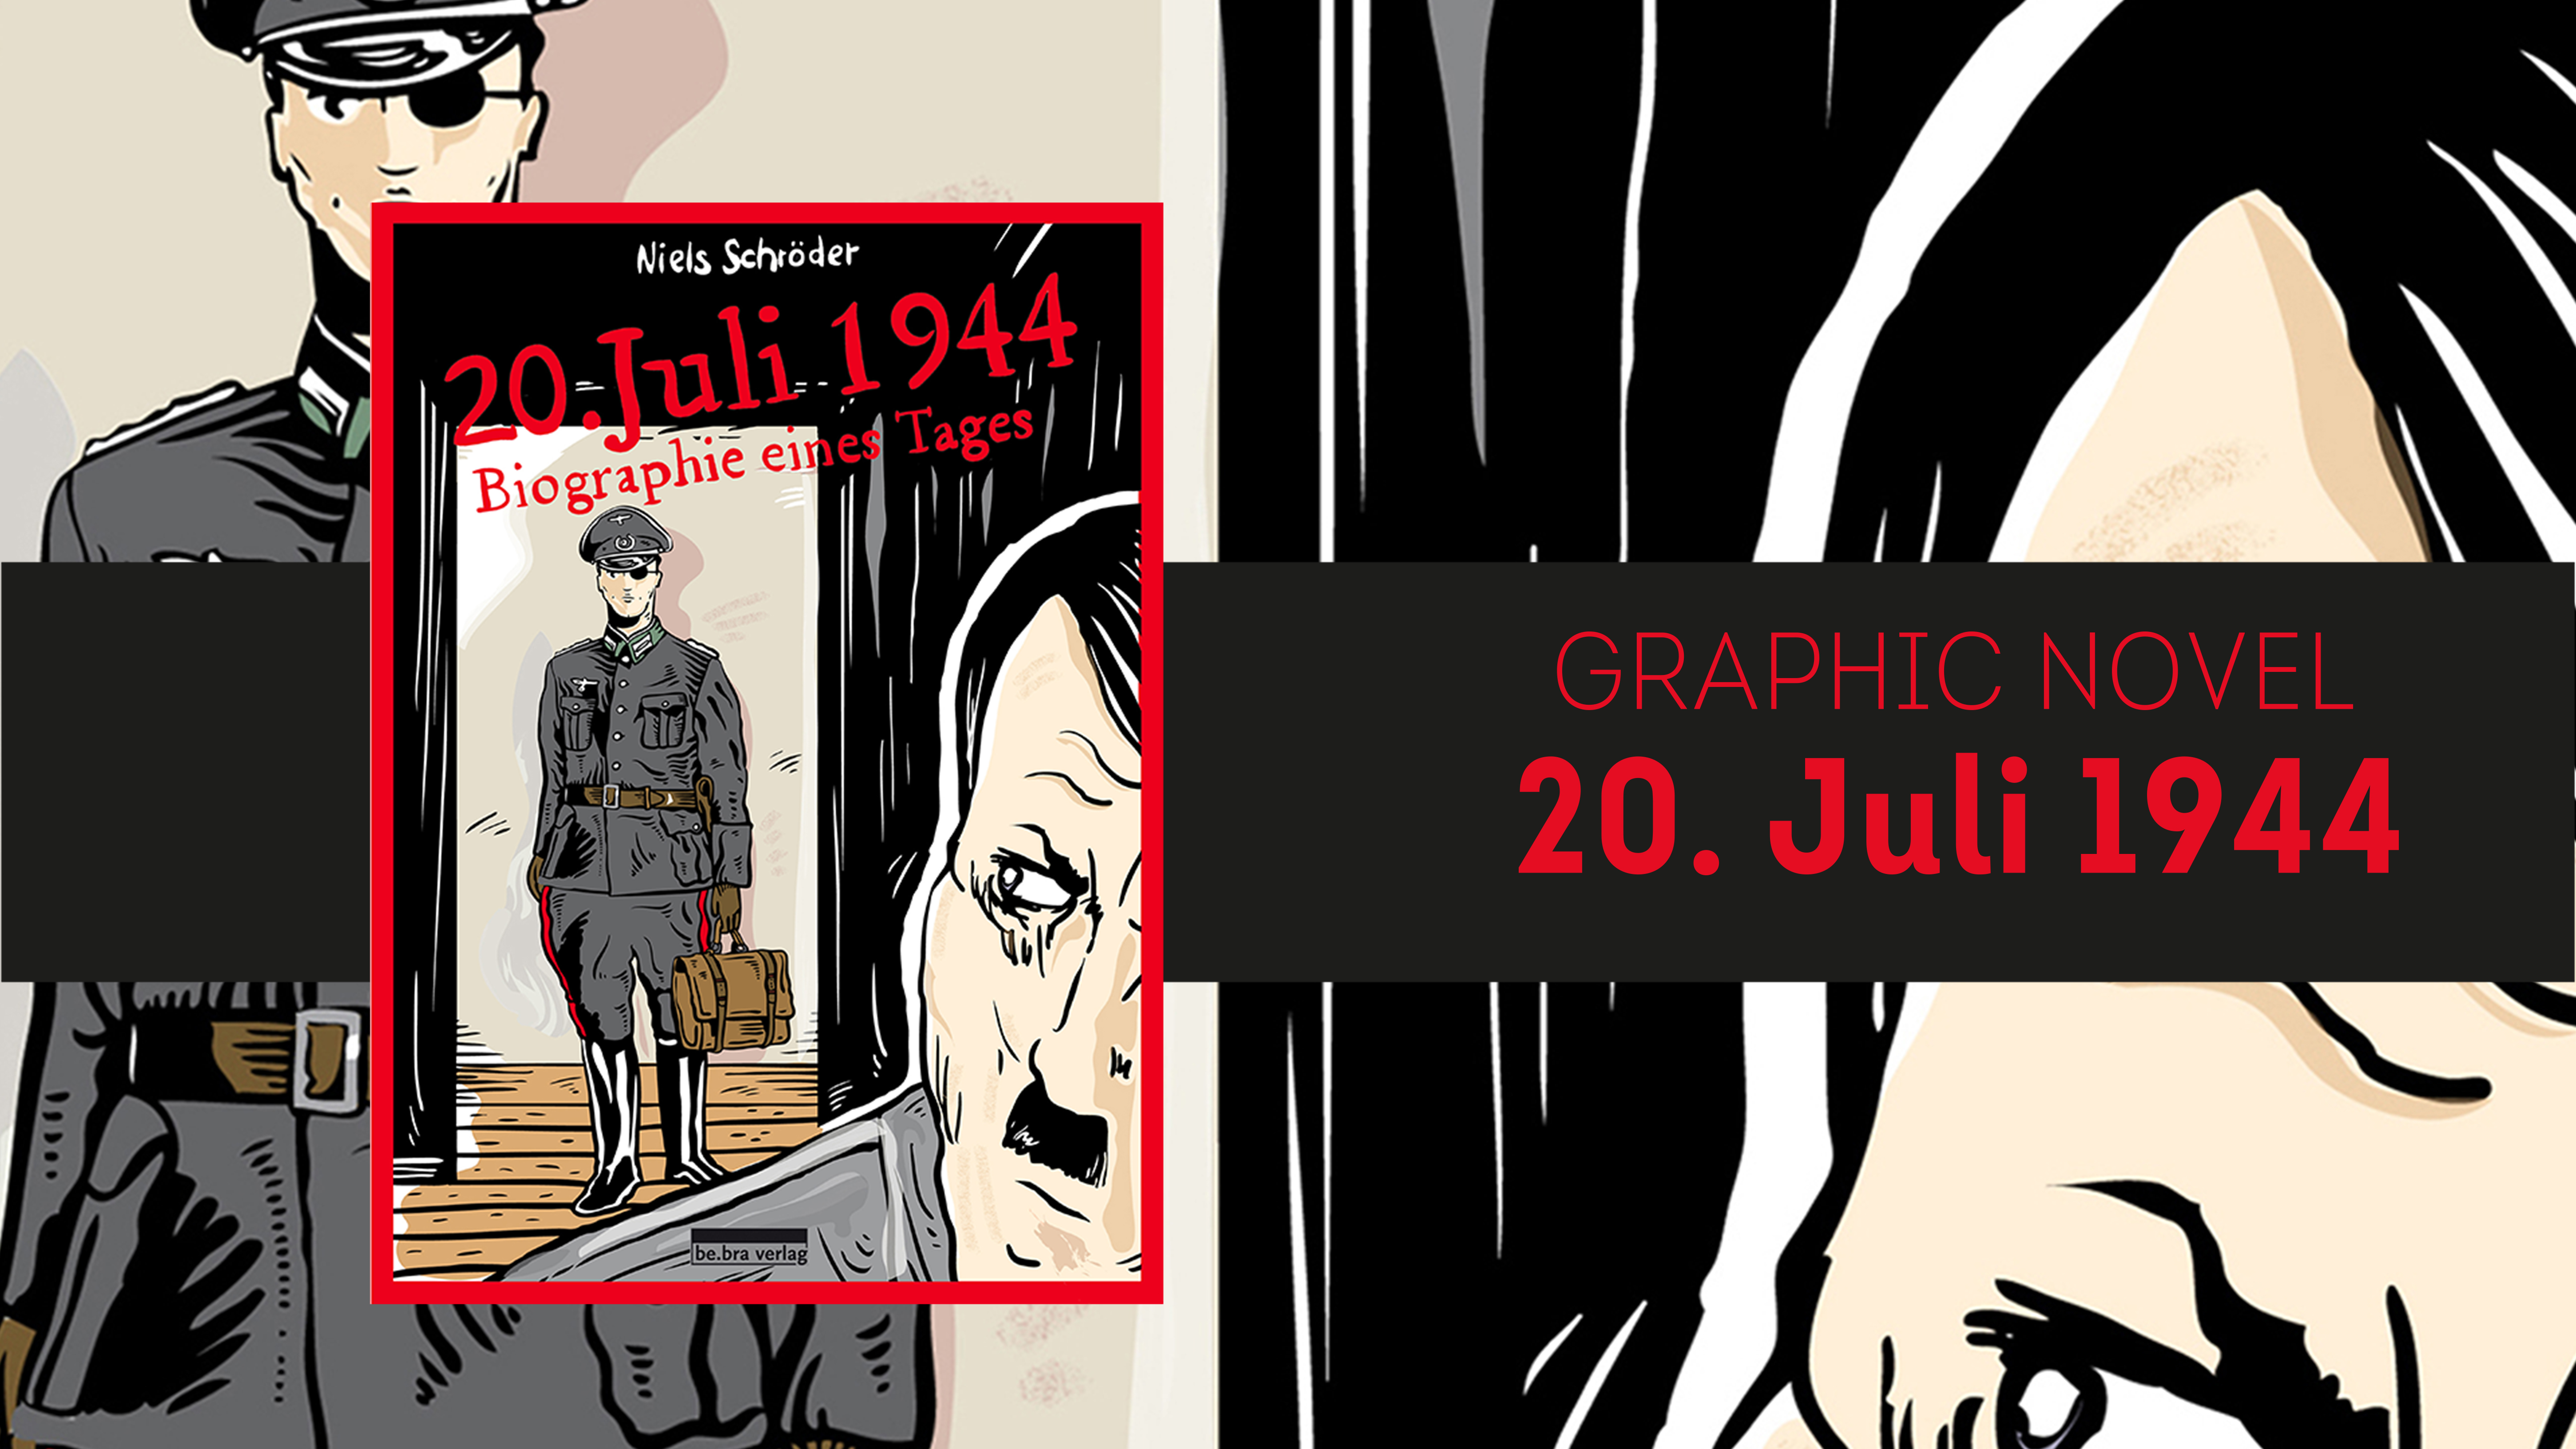 Coverbild der Graphic Novel "20. Juli 1944"